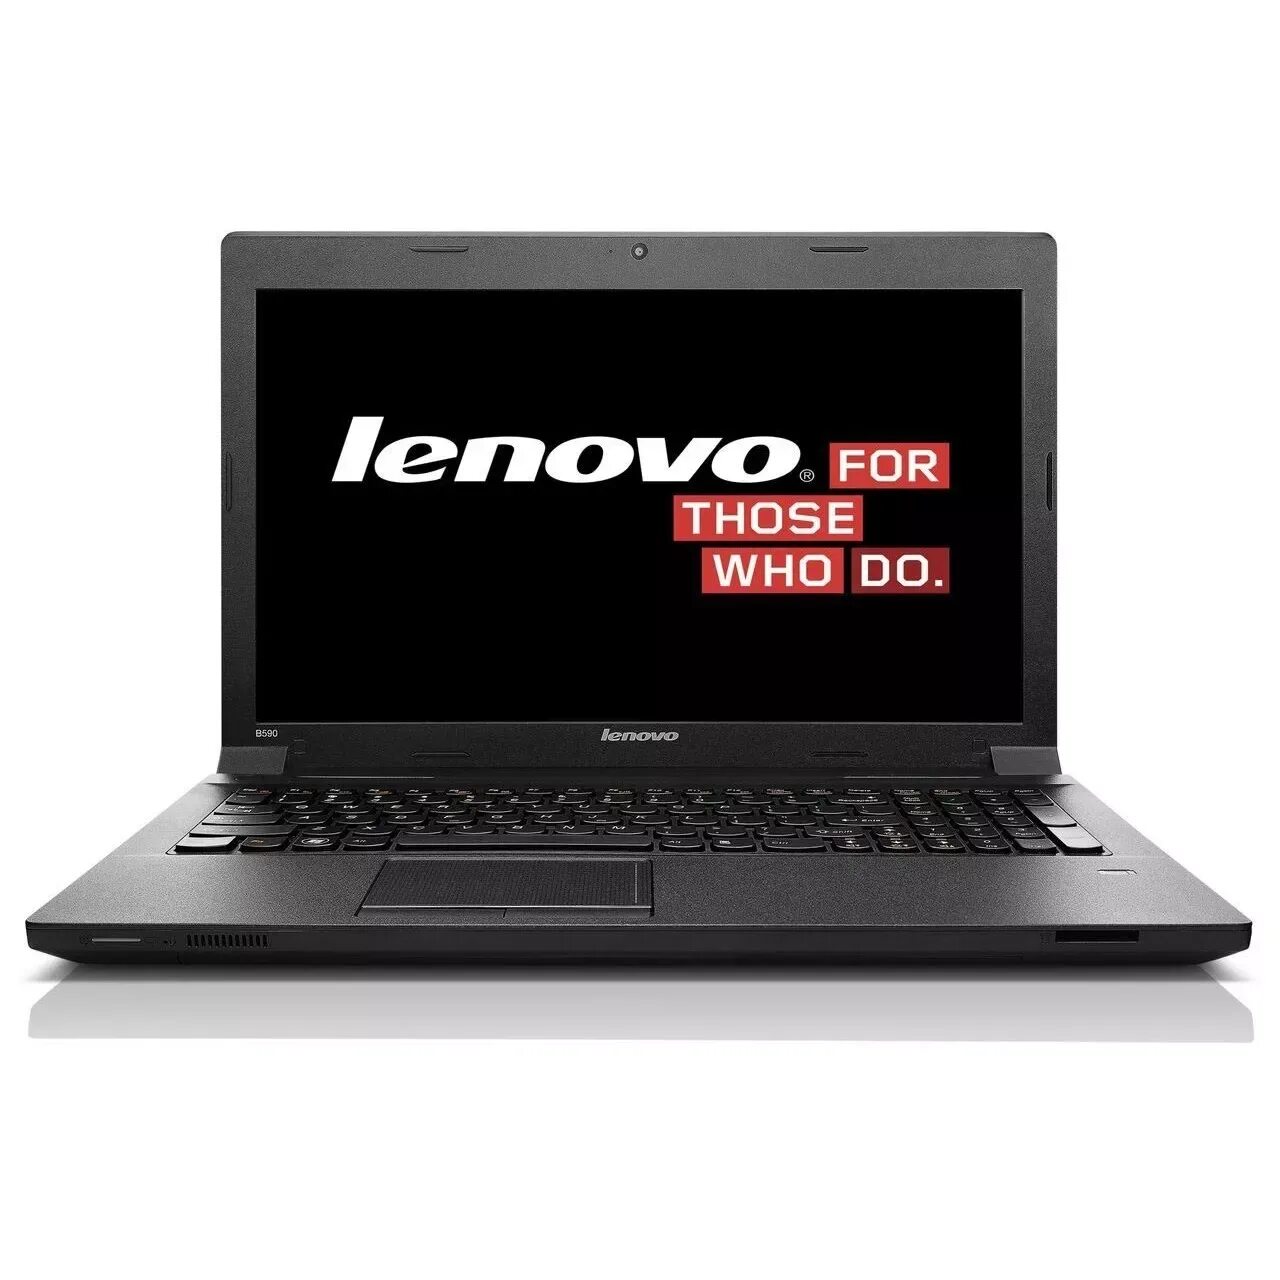 Lenovo g50 память. Lenovo z50-75. Lenovo IDEAPAD g5070. Ноутбук Lenovo IDEAPAD z400 Touch. Lenovo IDEAPAD z5070.